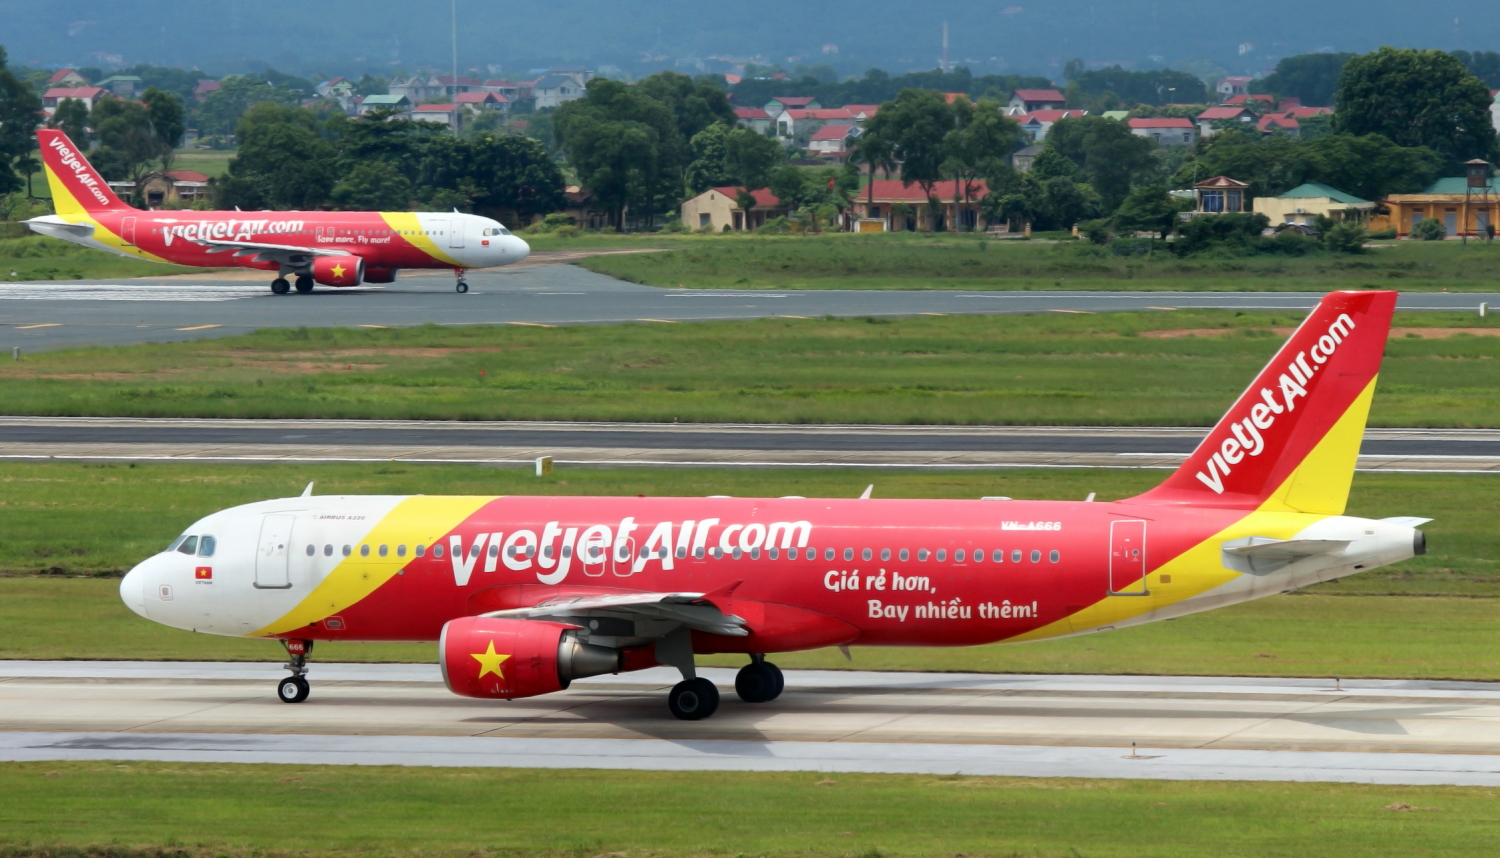 Vietjet Aircraft at Tan Son Nhat Airport